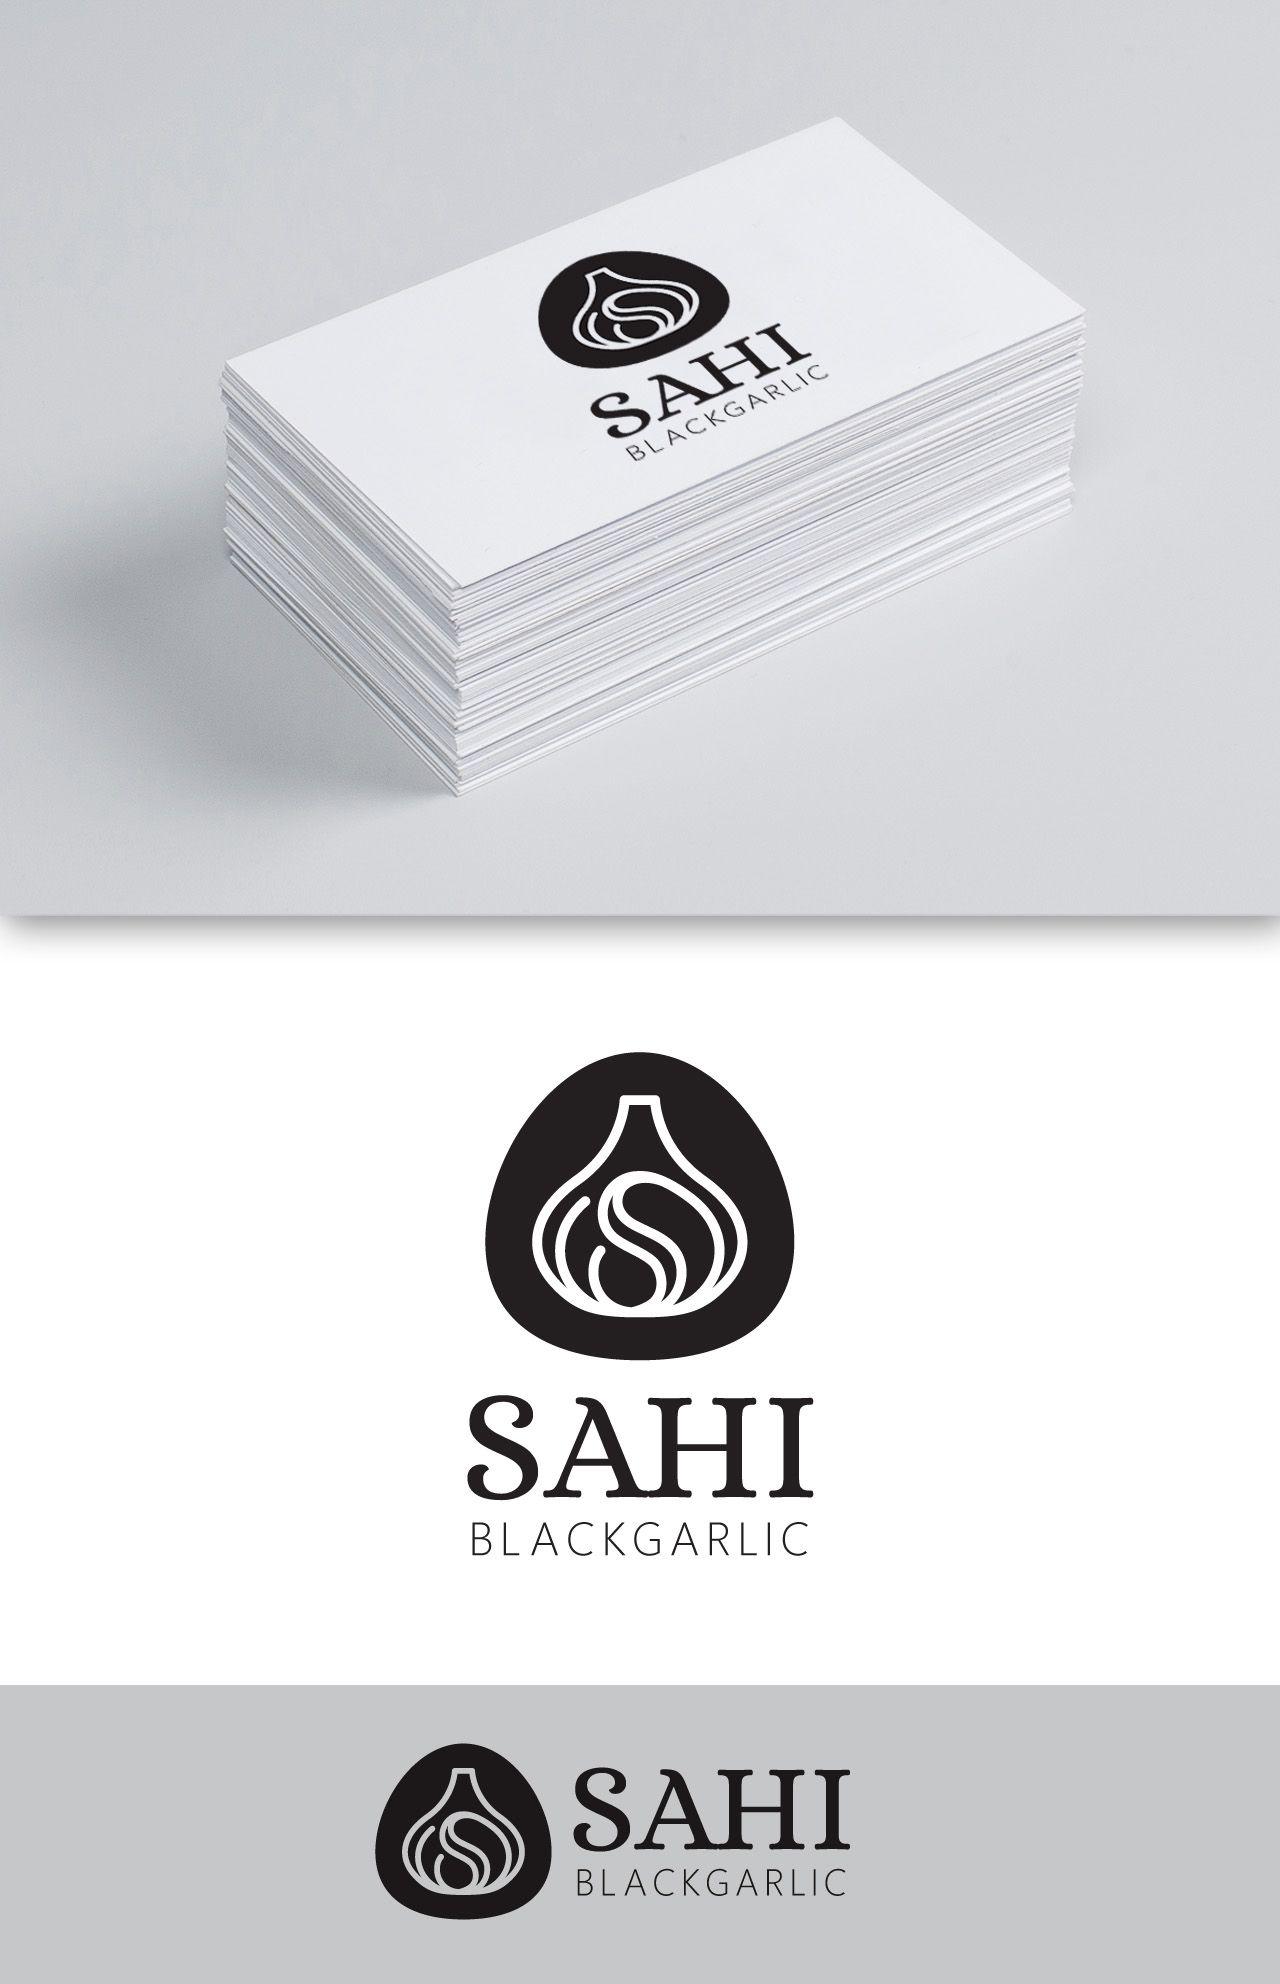 Sahi Logo - Sahi Black Garlic logo by Me | My Logo | Store design, Logos, Design